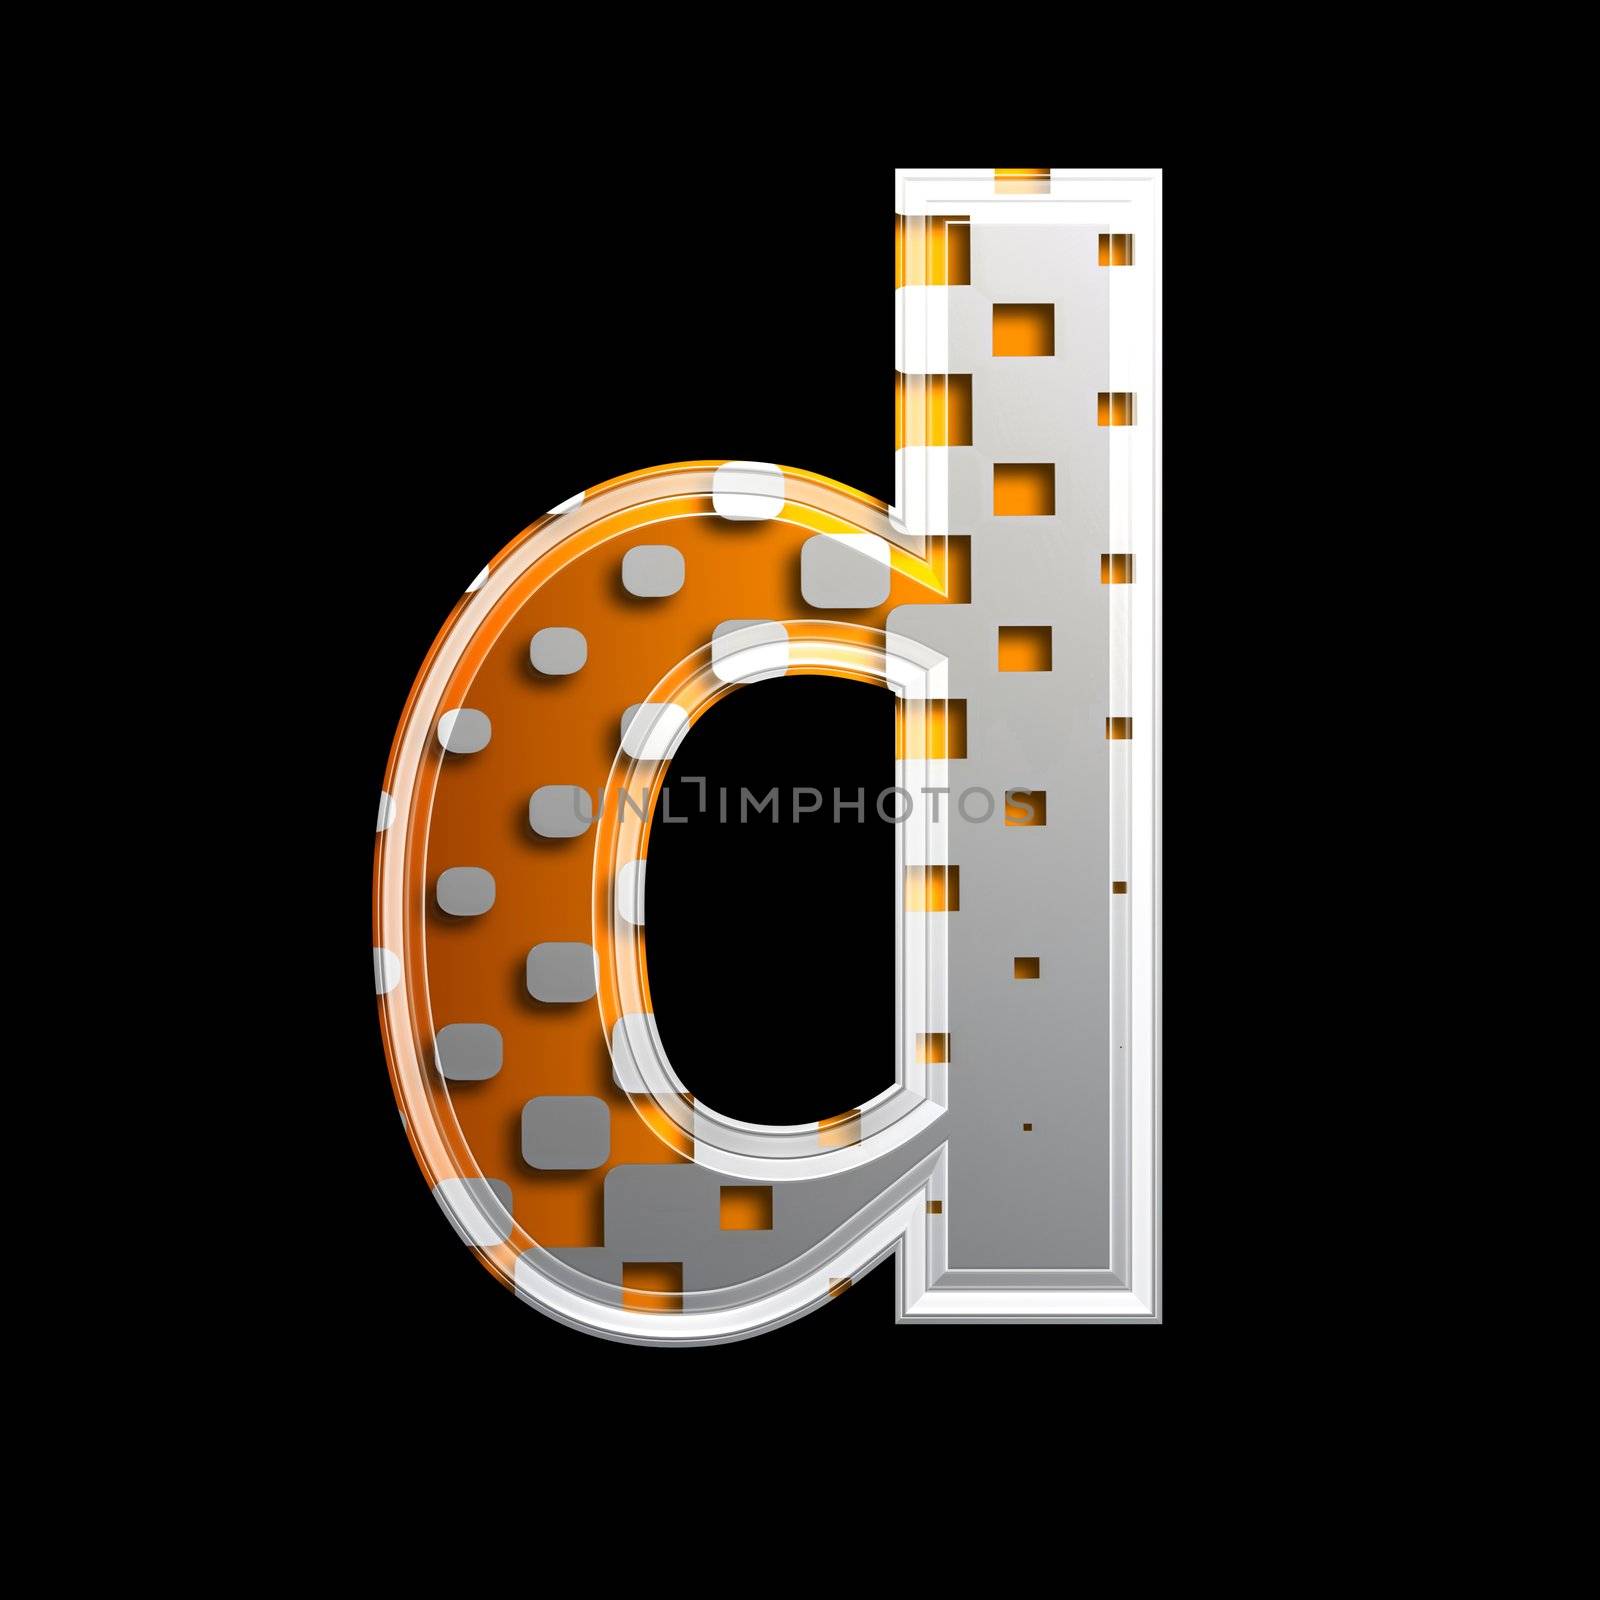 halftone 3d letter - D by chrisroll